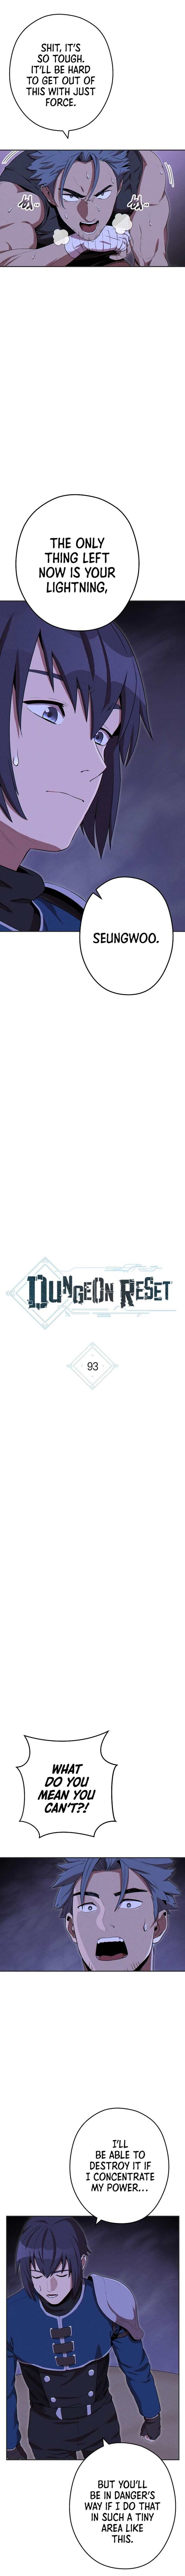 Dungeon Reset 93 2